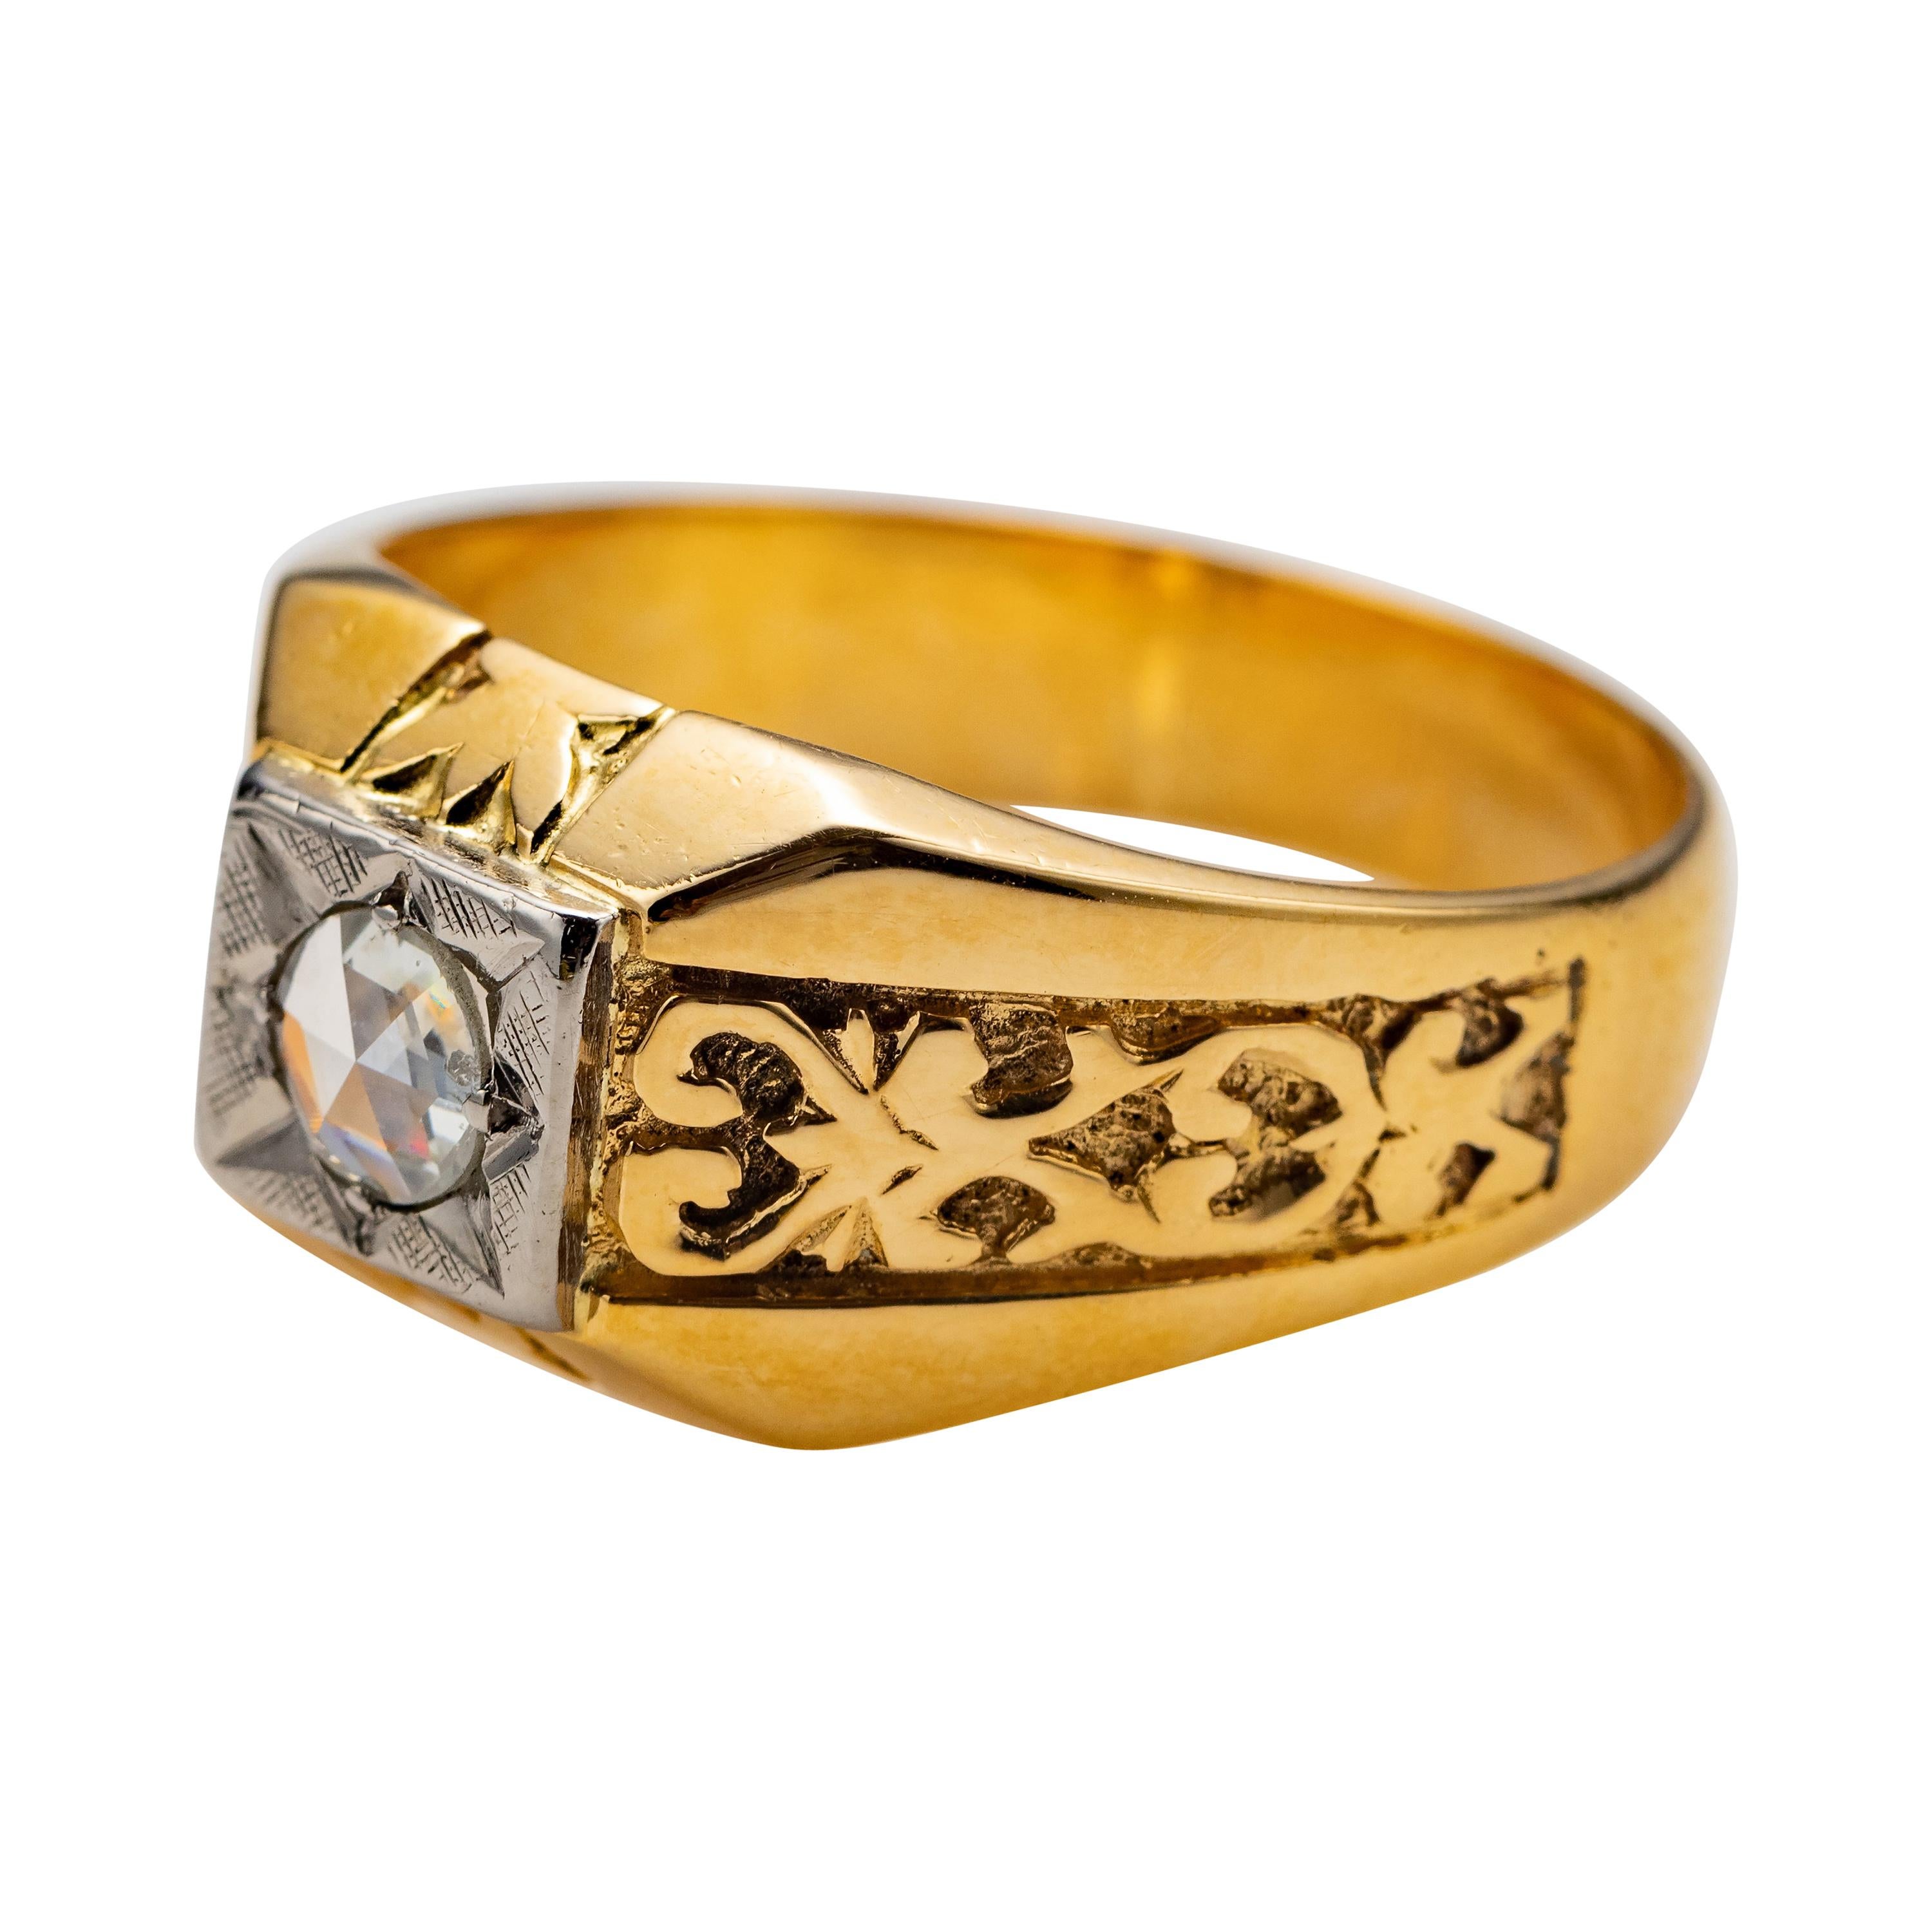 Men's Rose-Cut Diamond Ring Tudor Style, 1940s, European